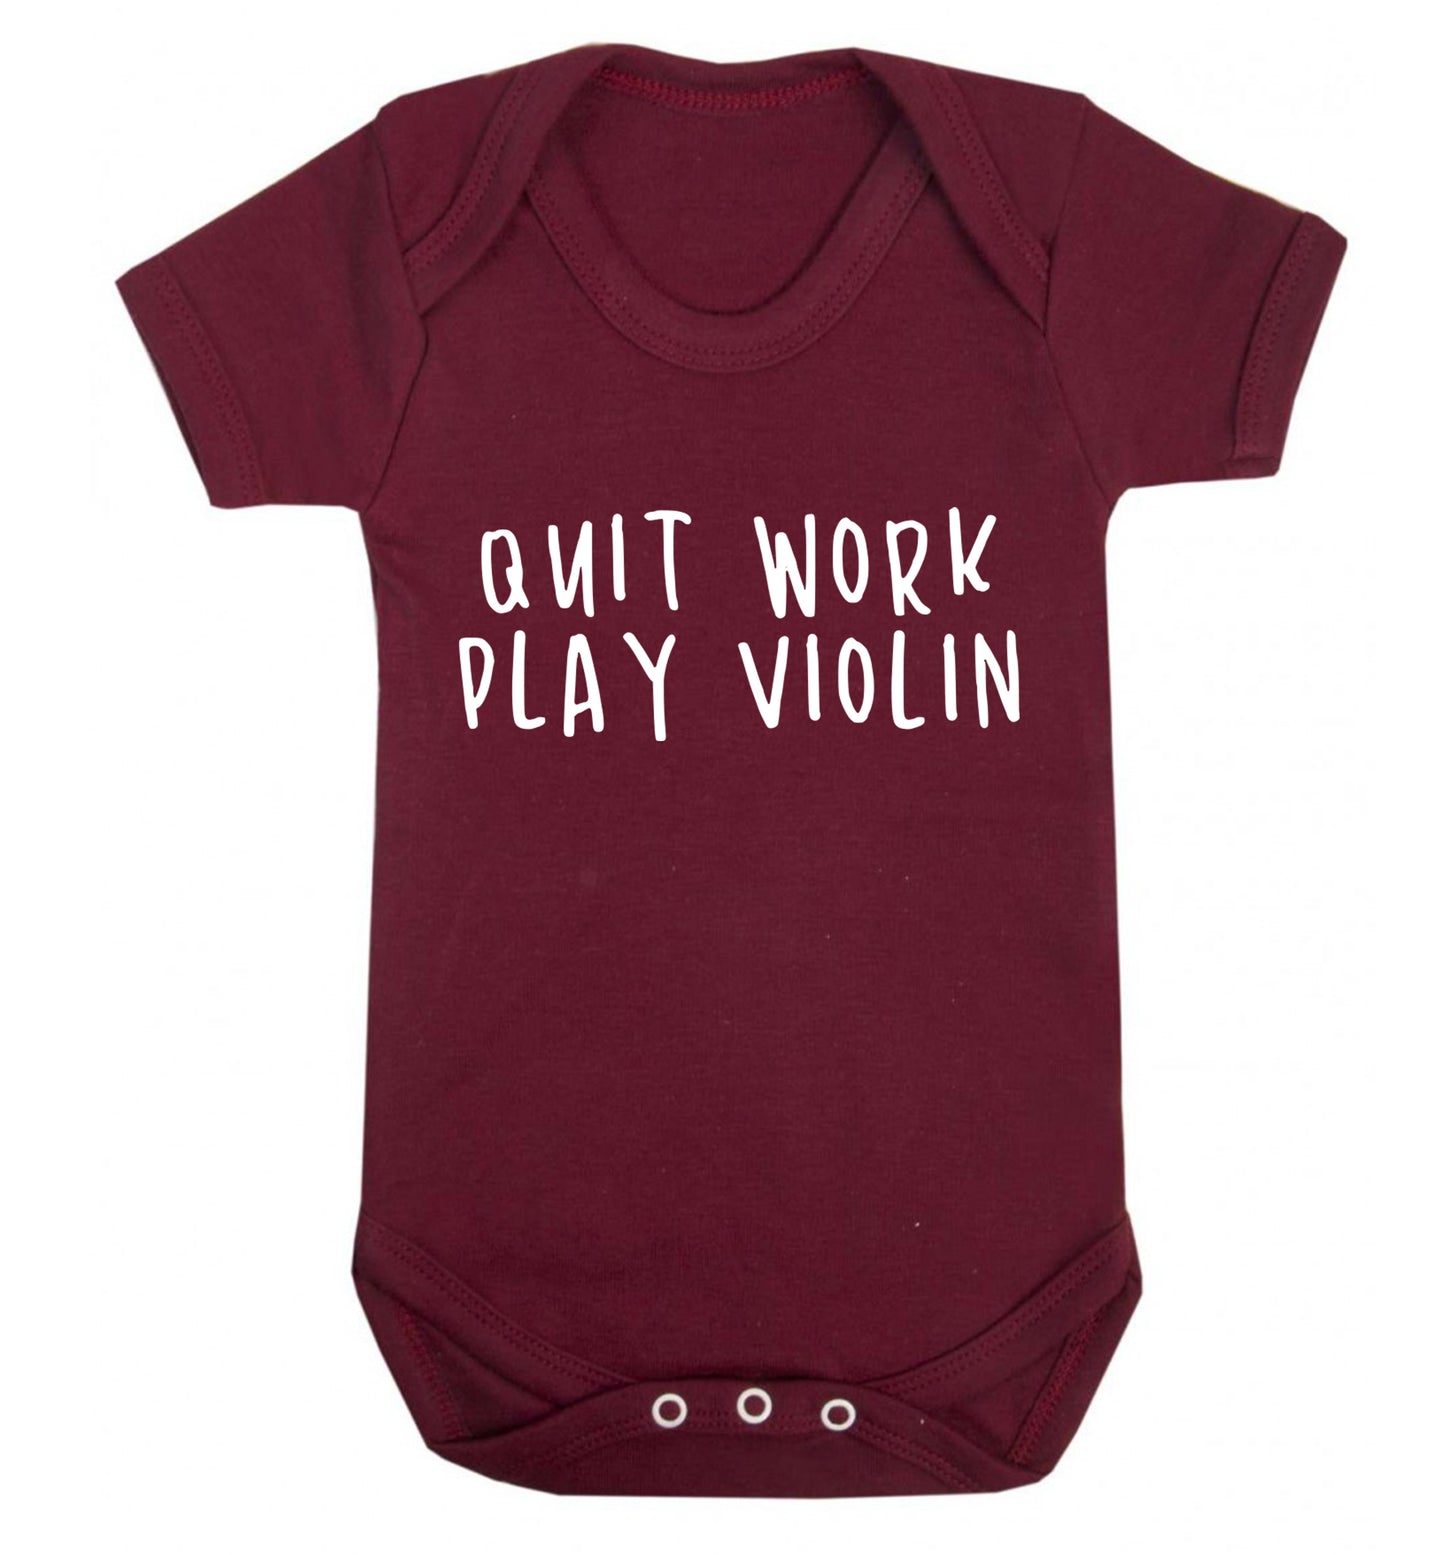 Quit work play violin Baby Vest maroon 18-24 months